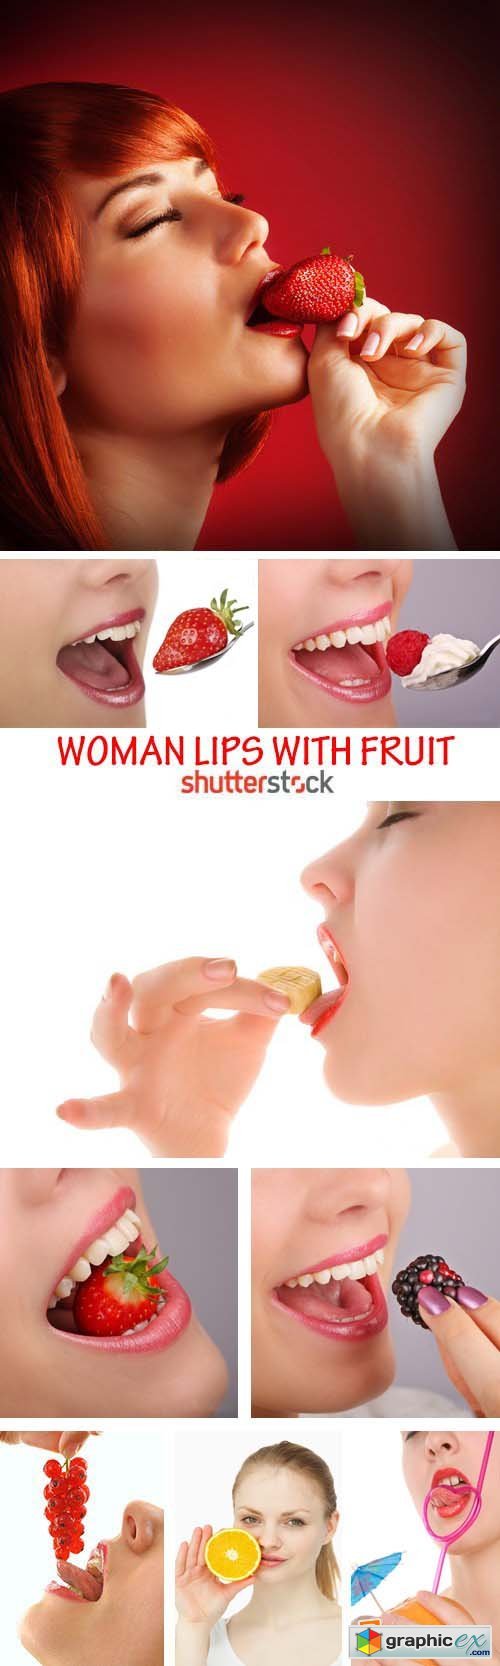 Amazing SS - Woman lips with fruit, 25xJPG